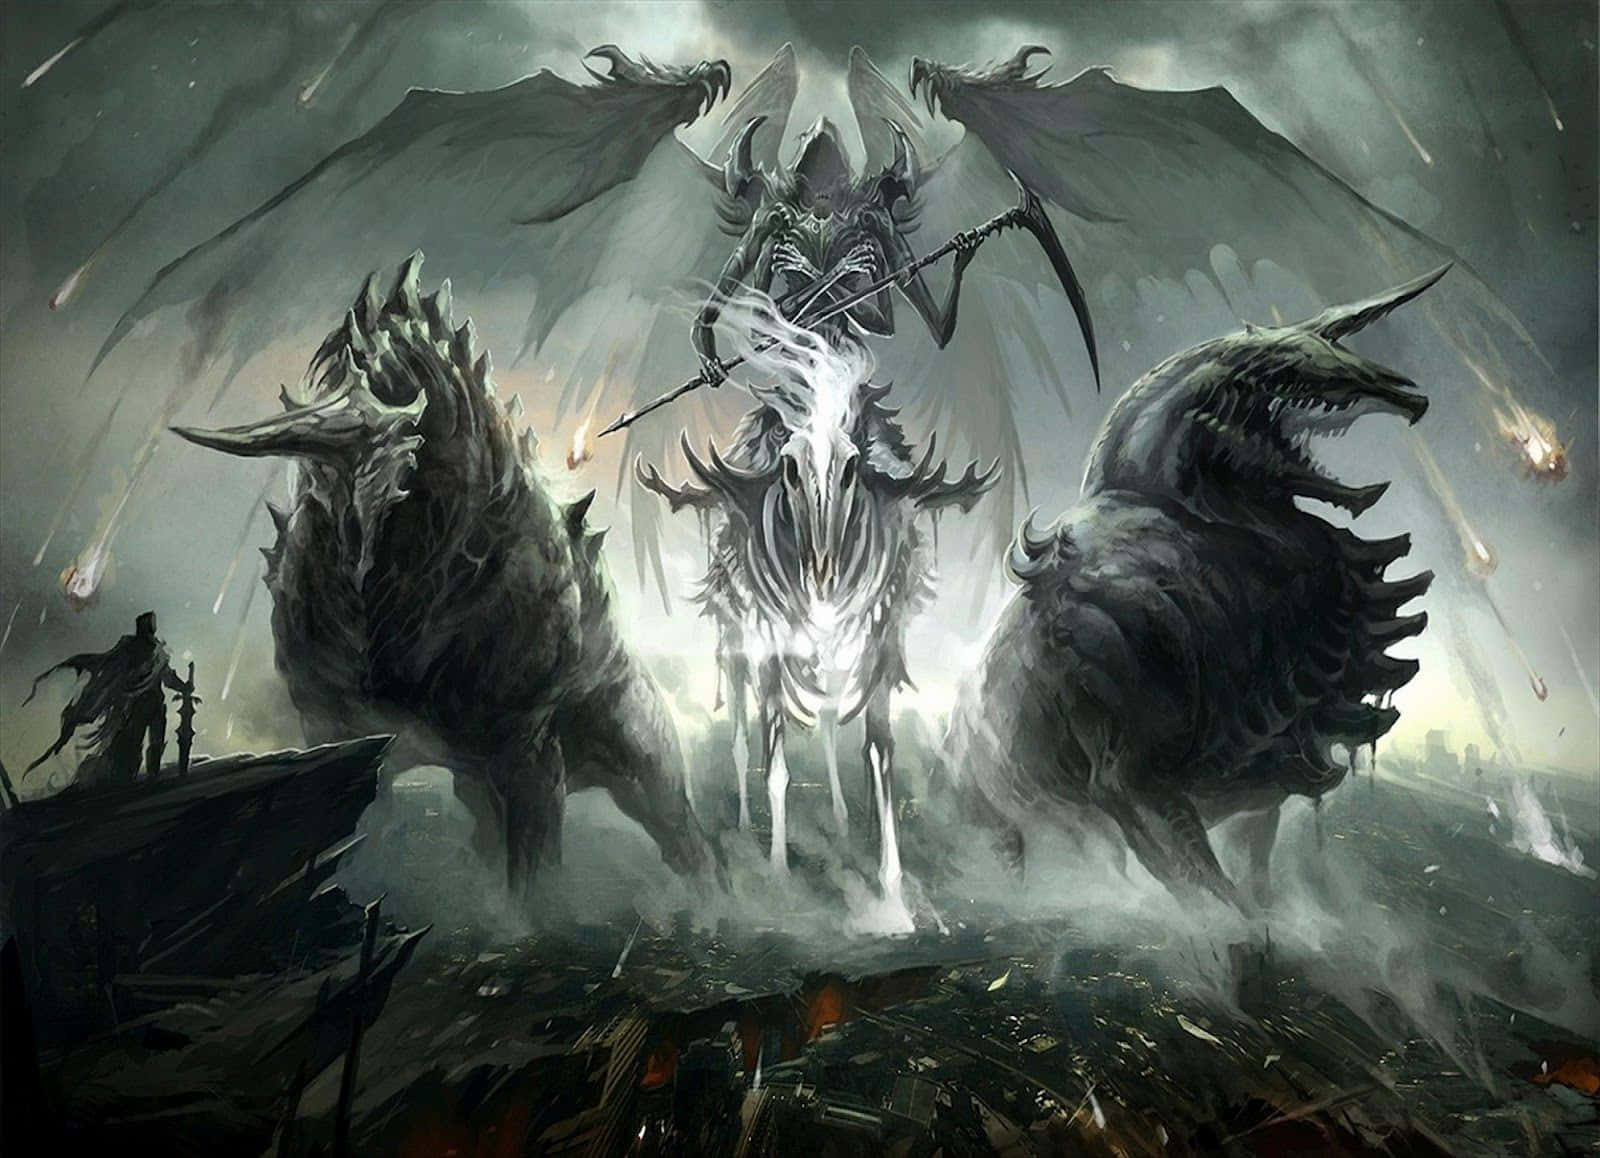 "Enter the realm of Dark Fantasy" Wallpaper